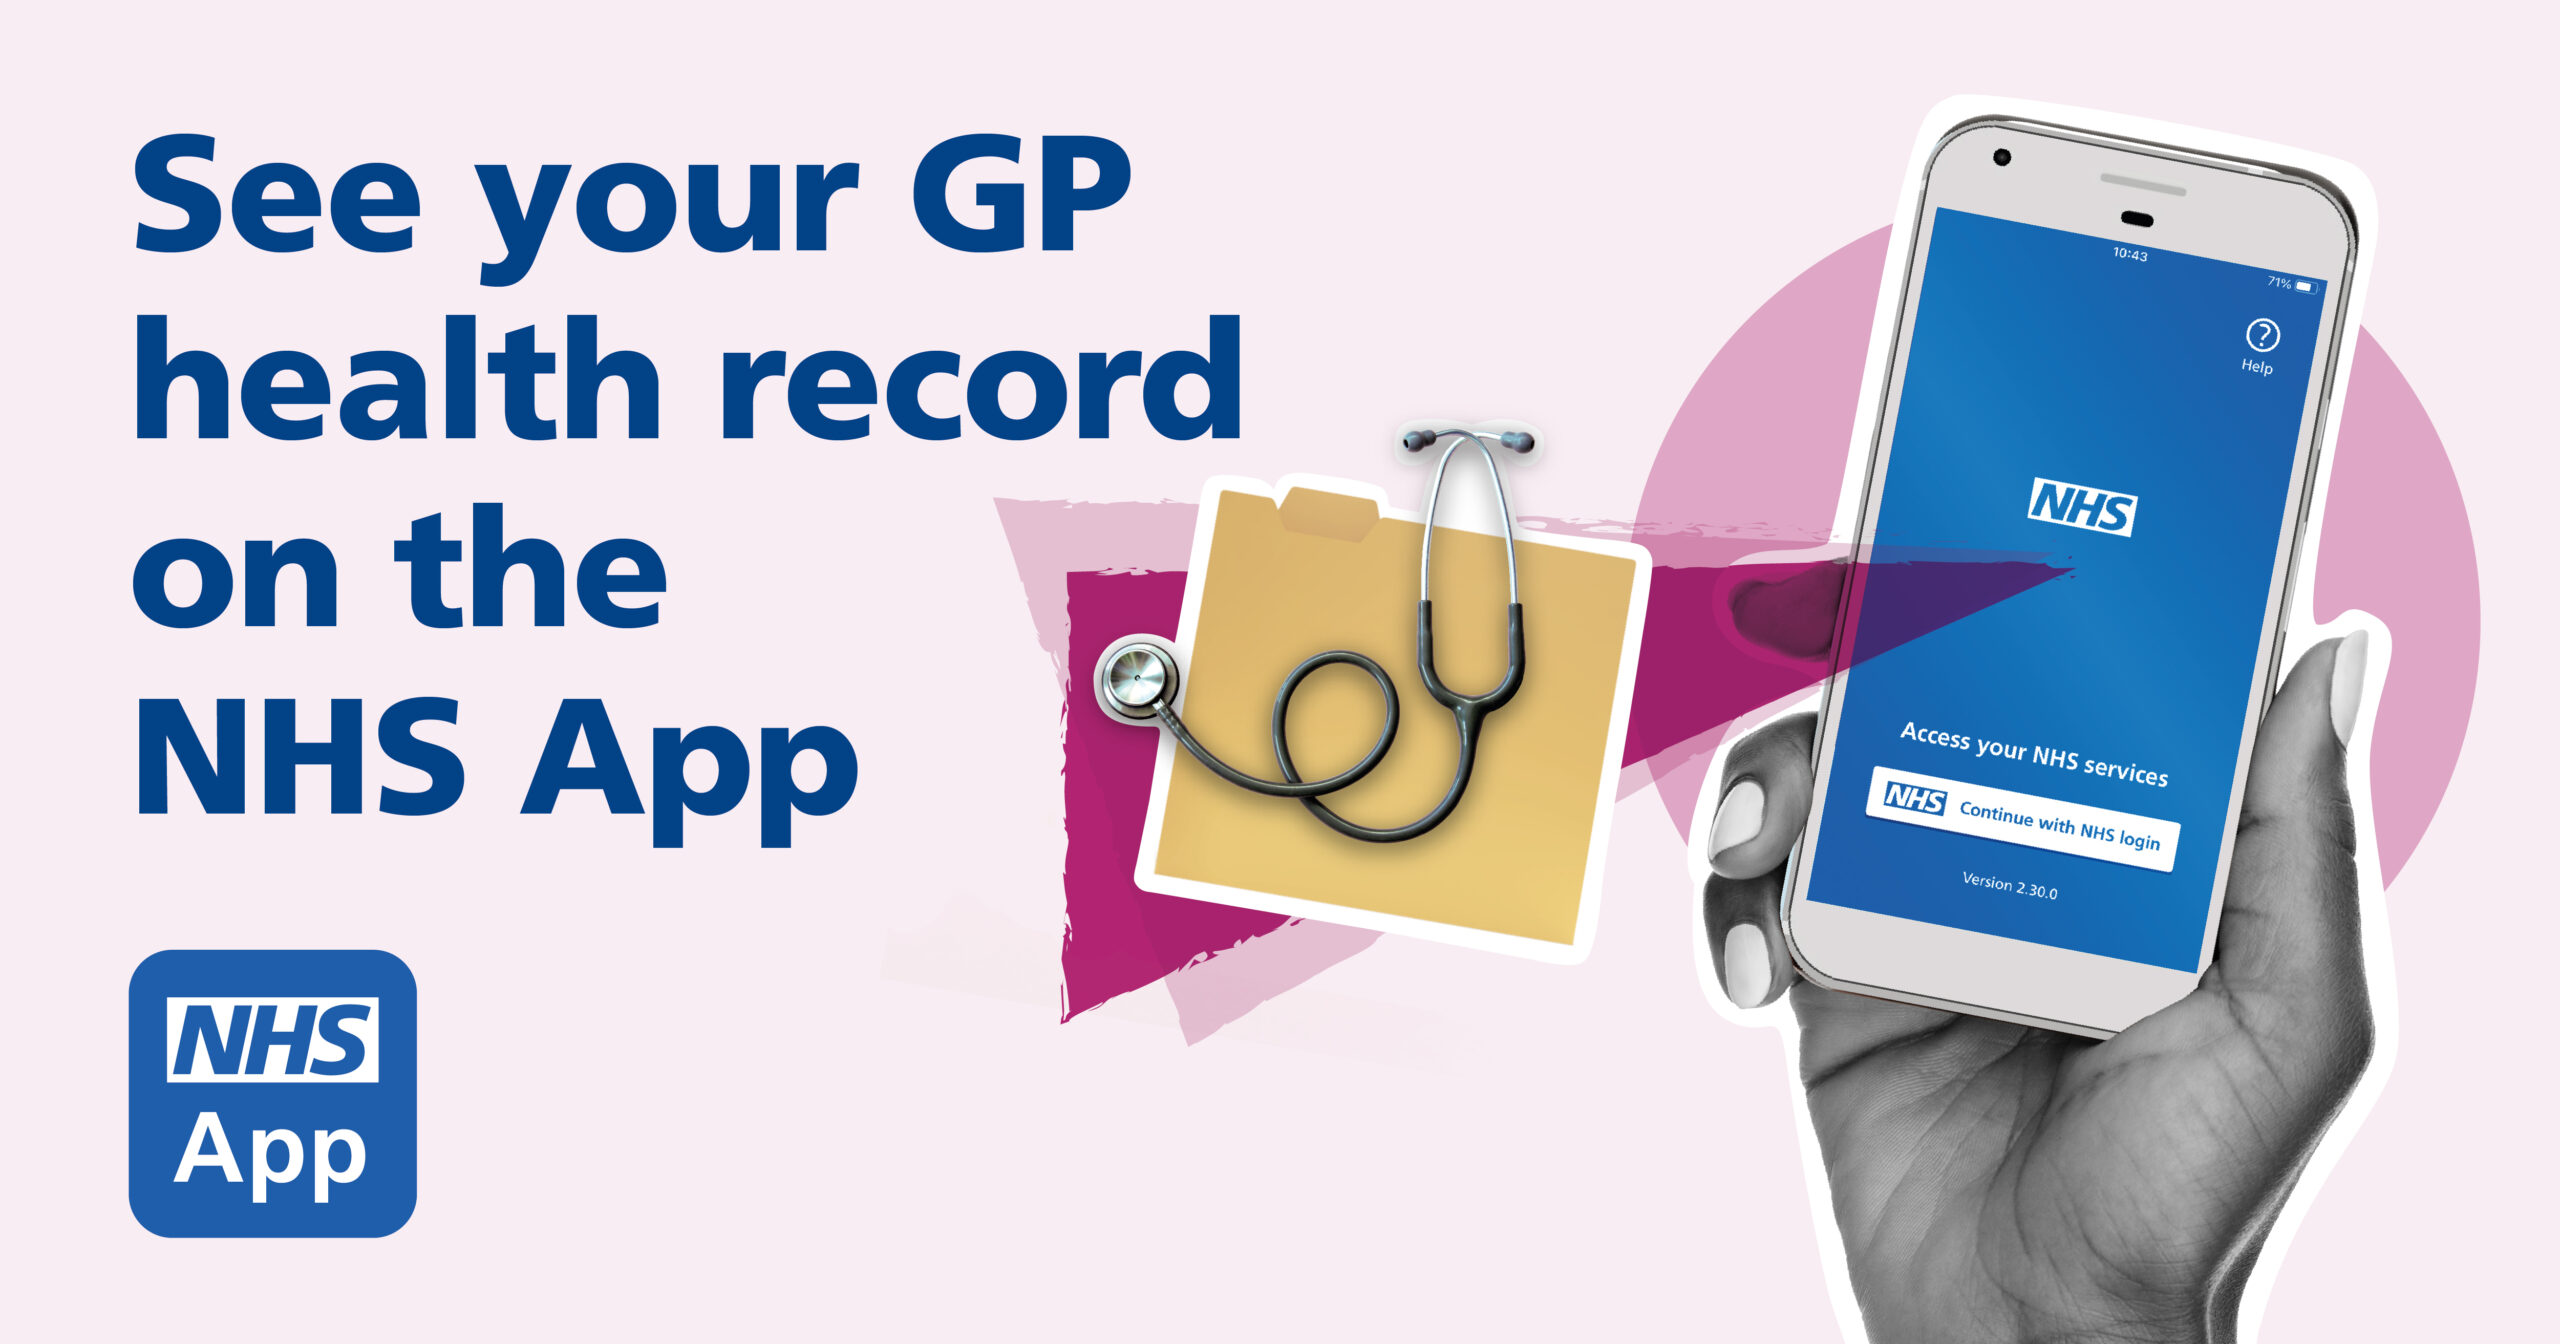 NHS-App-GP-Records-Access-Facebook-social-media-image-scaled.jpg